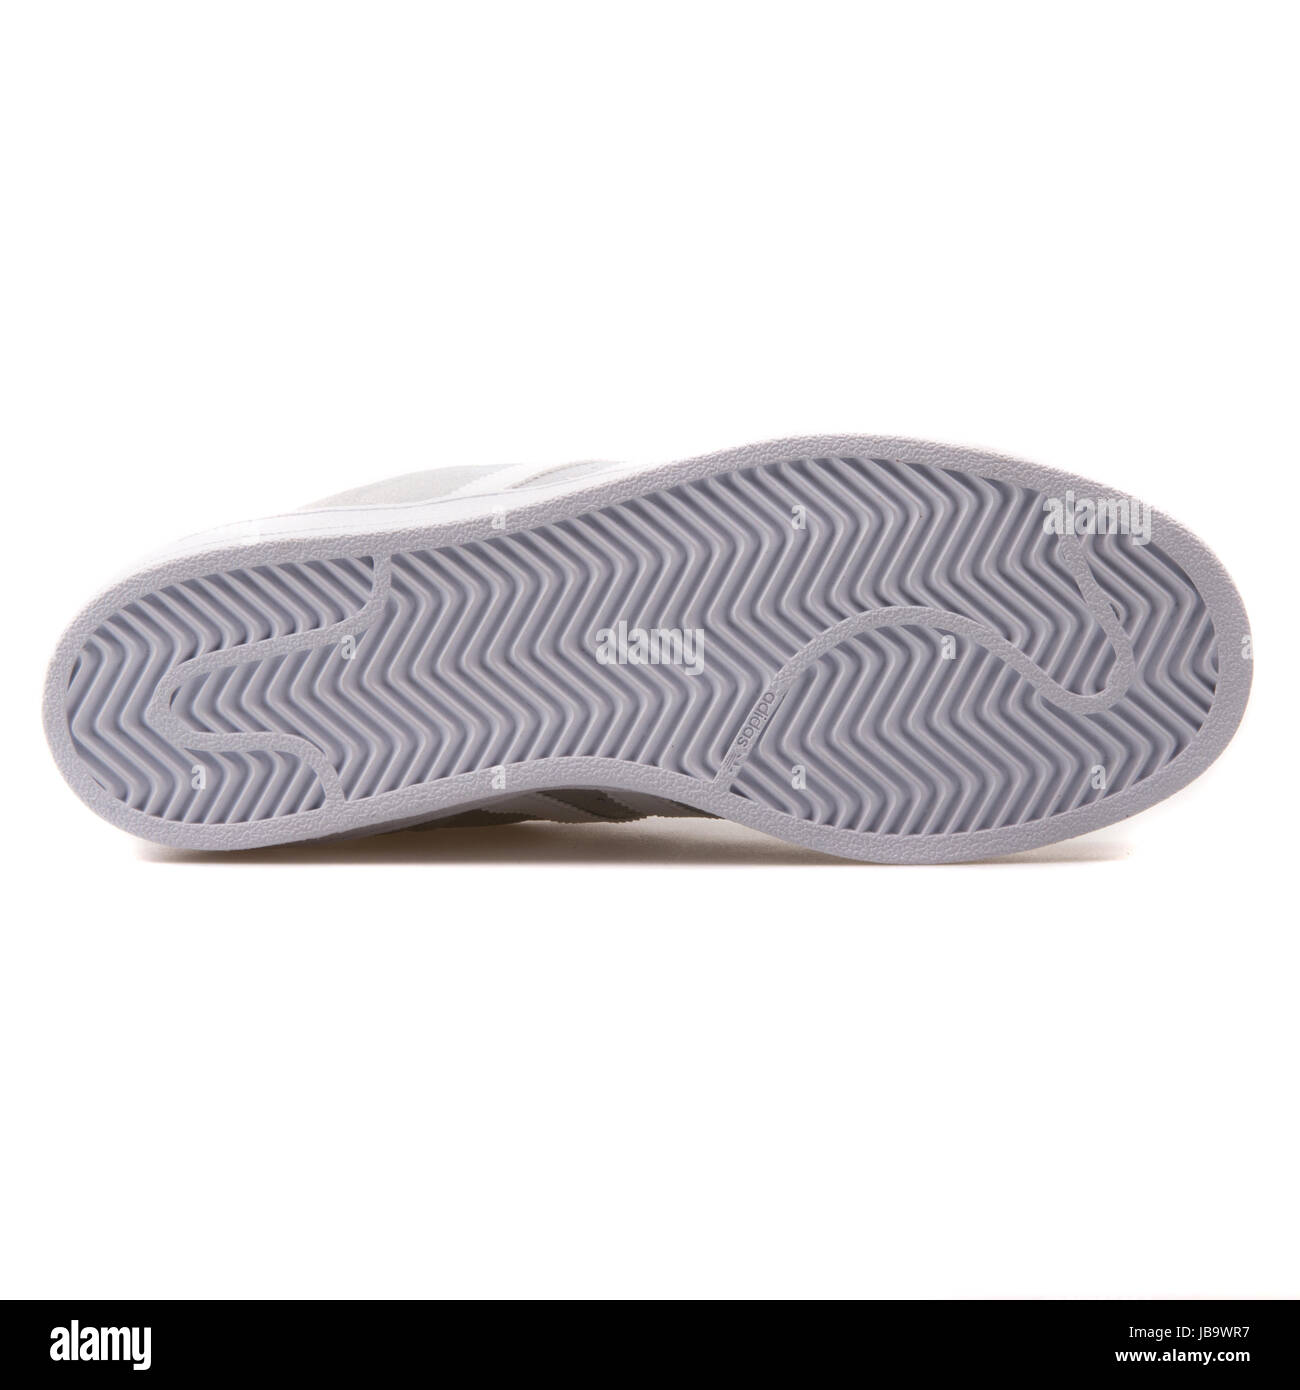 Adidas Superstar W Holograma Iridescent zapatos de mujer - S81644  Fotografía de stock - Alamy